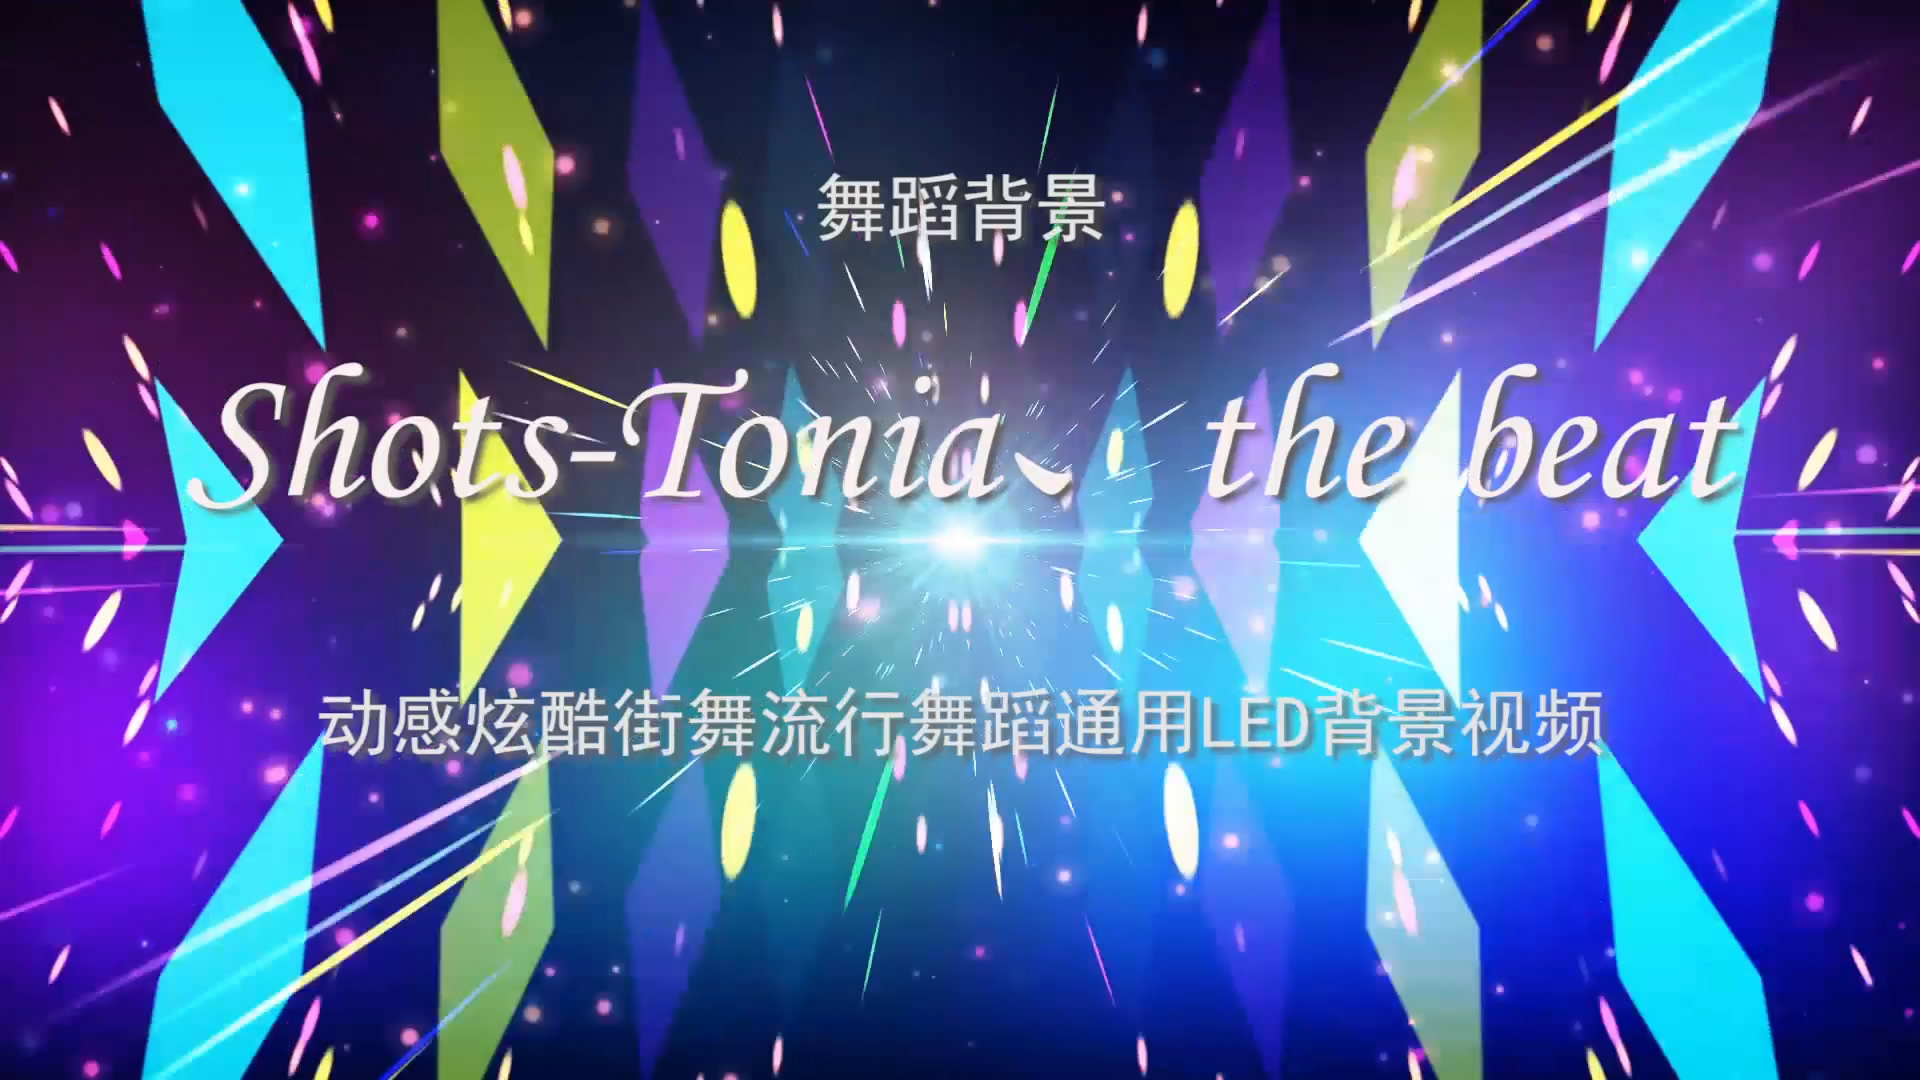 Shots-Tonia、the beat 破坏 动感炫酷街舞流行歌舞L